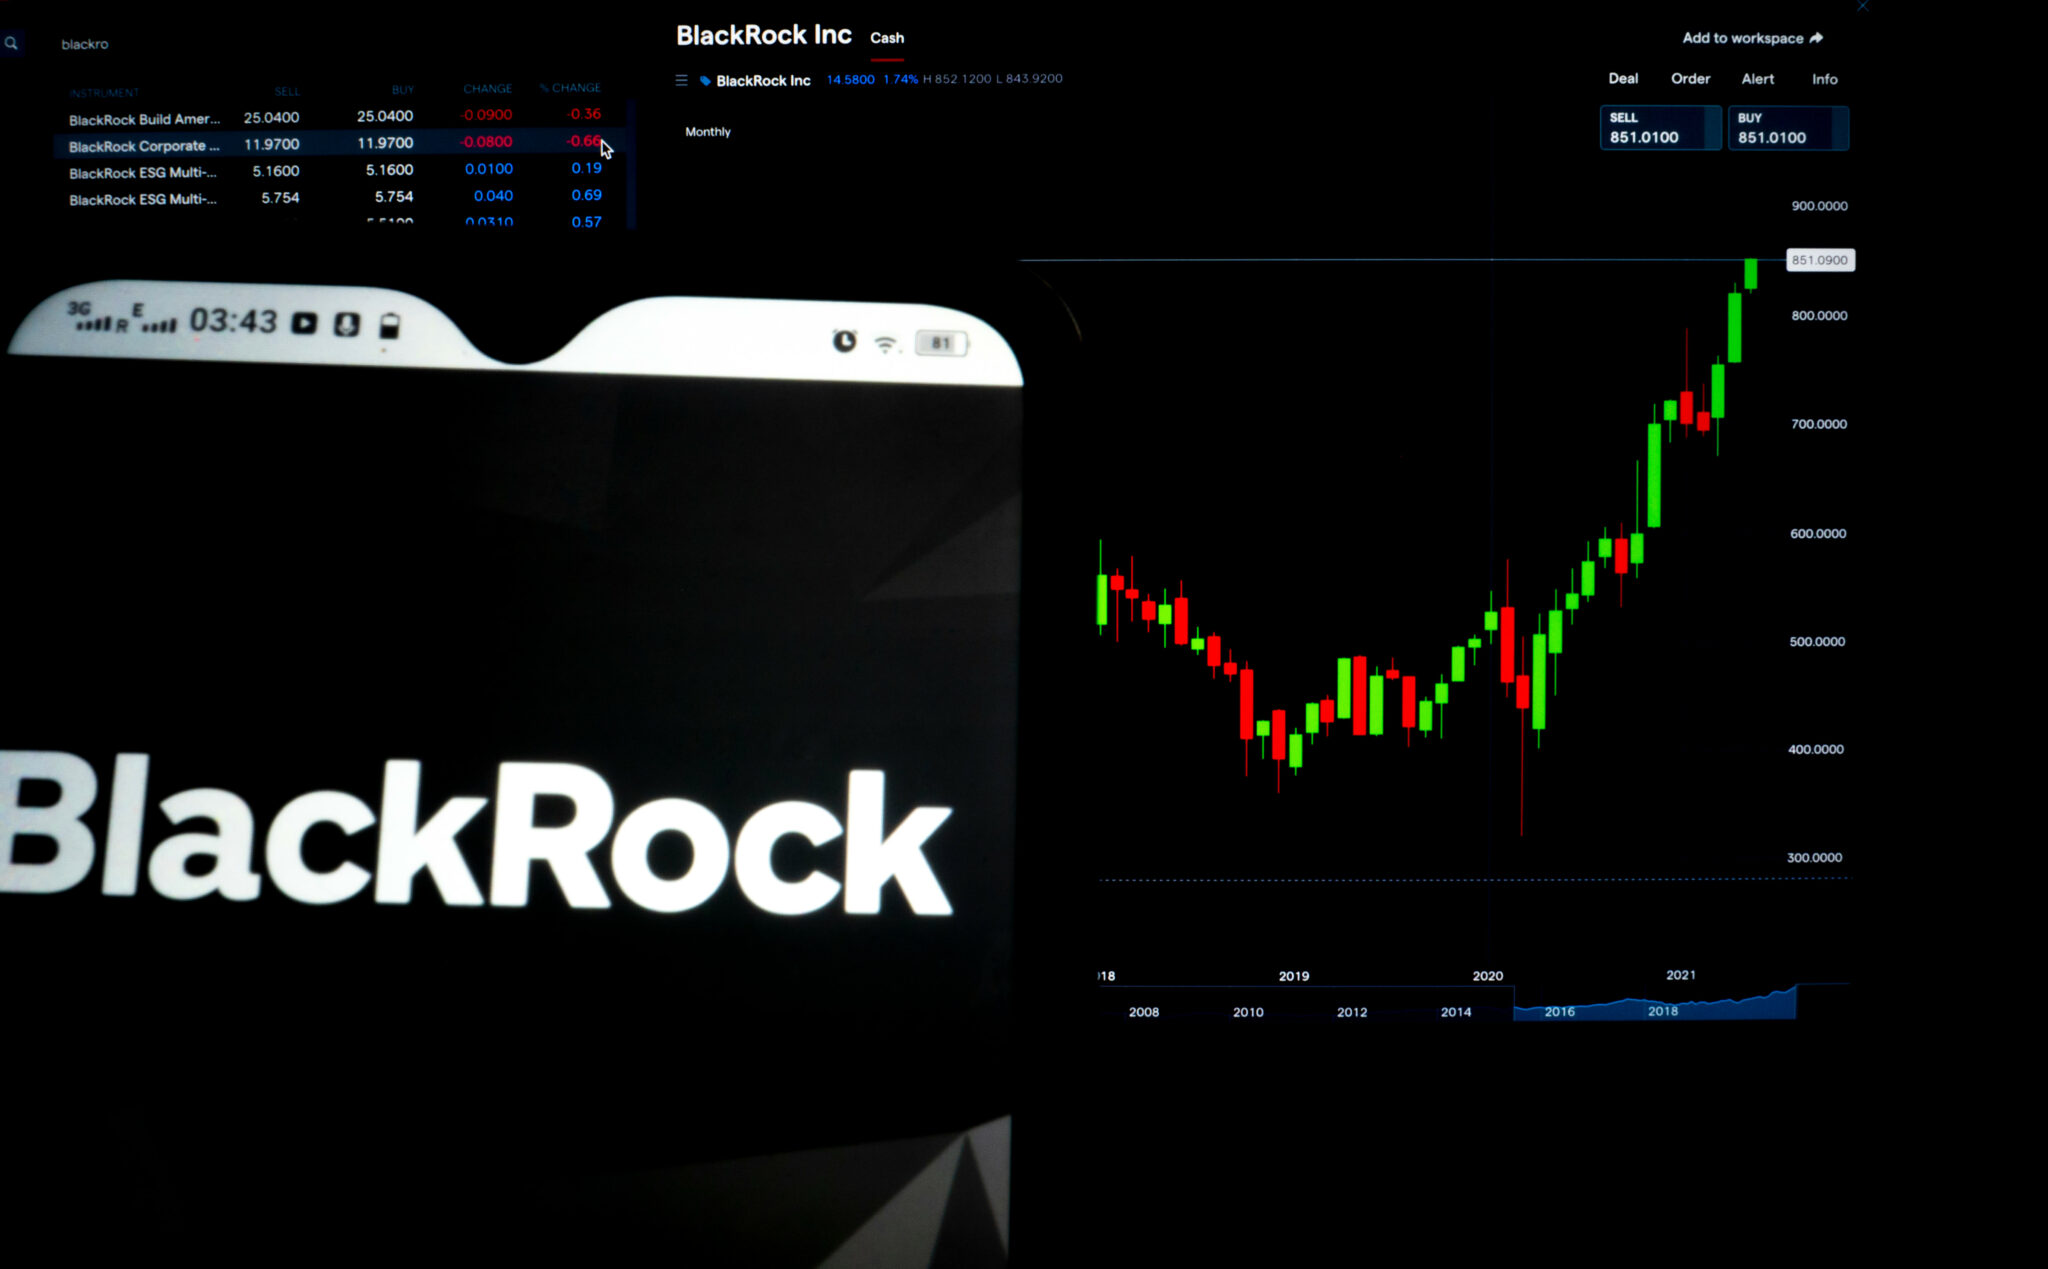 BlackRock Bitcoin ETF Surpasses $1 Billion in Assets in 4 Days